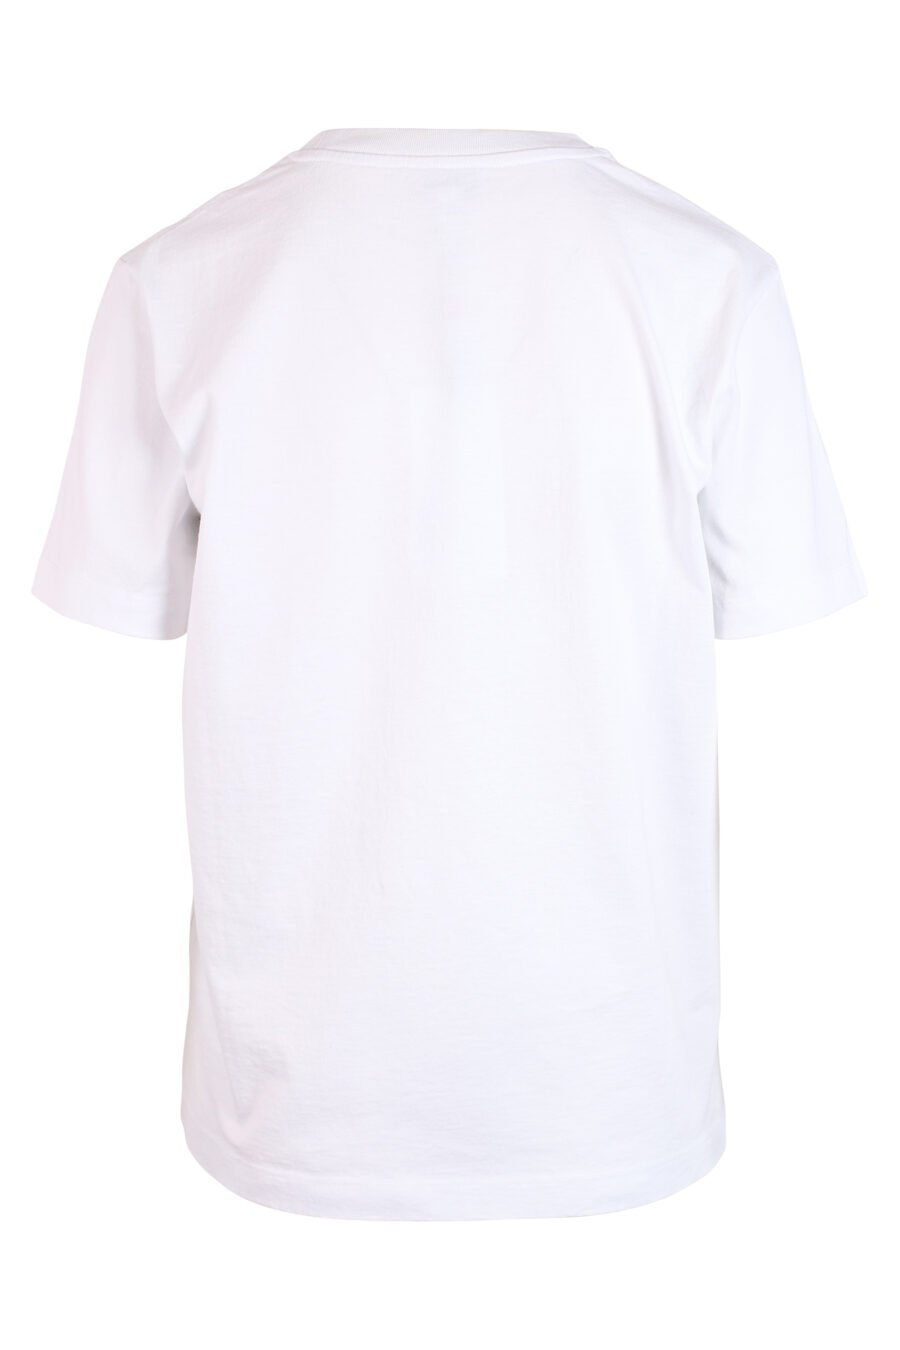 Weißes T-Shirt mit grünem Maxilogo "paris" - IMG 3270